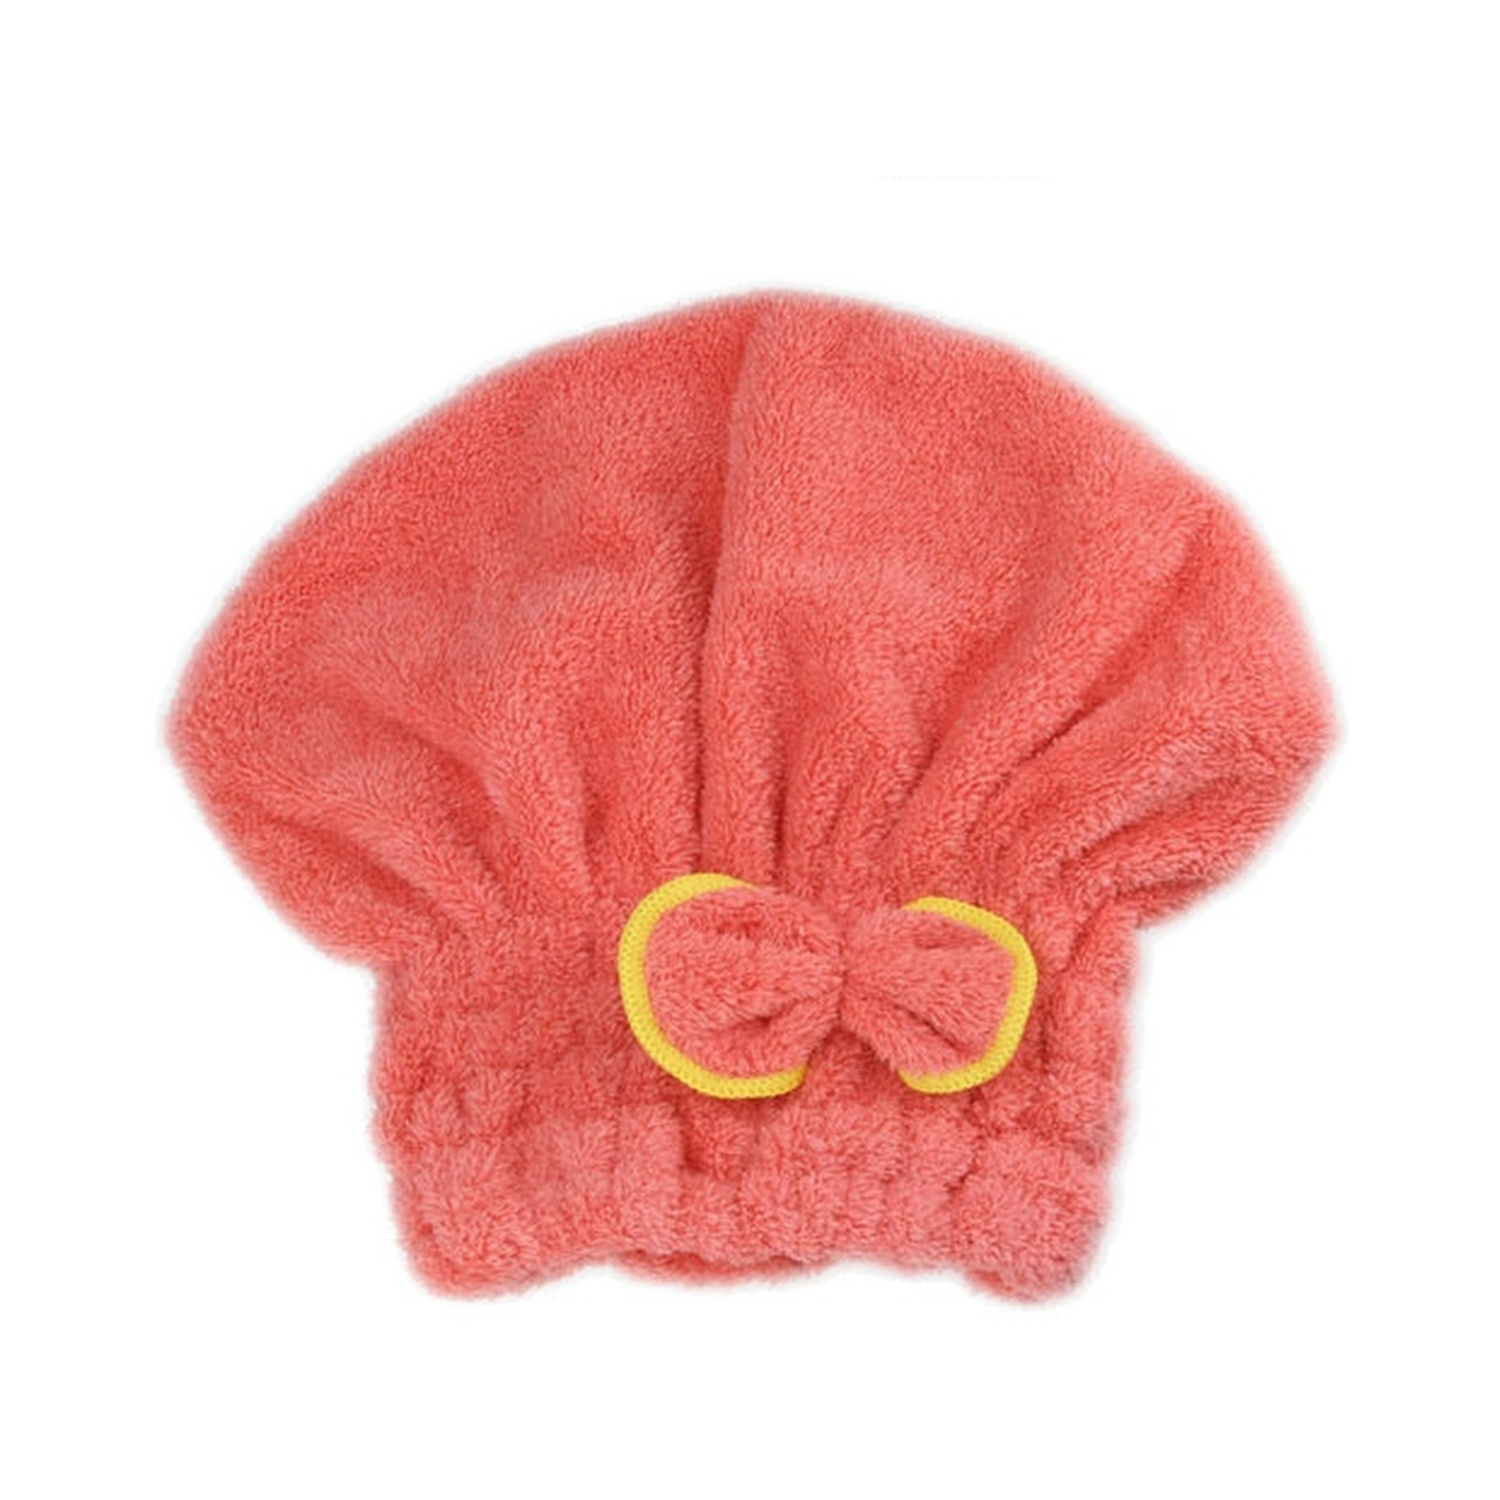 Полотенце Rabizy Мягкая махровая шапочка для быстрой сушки волос - фото 1